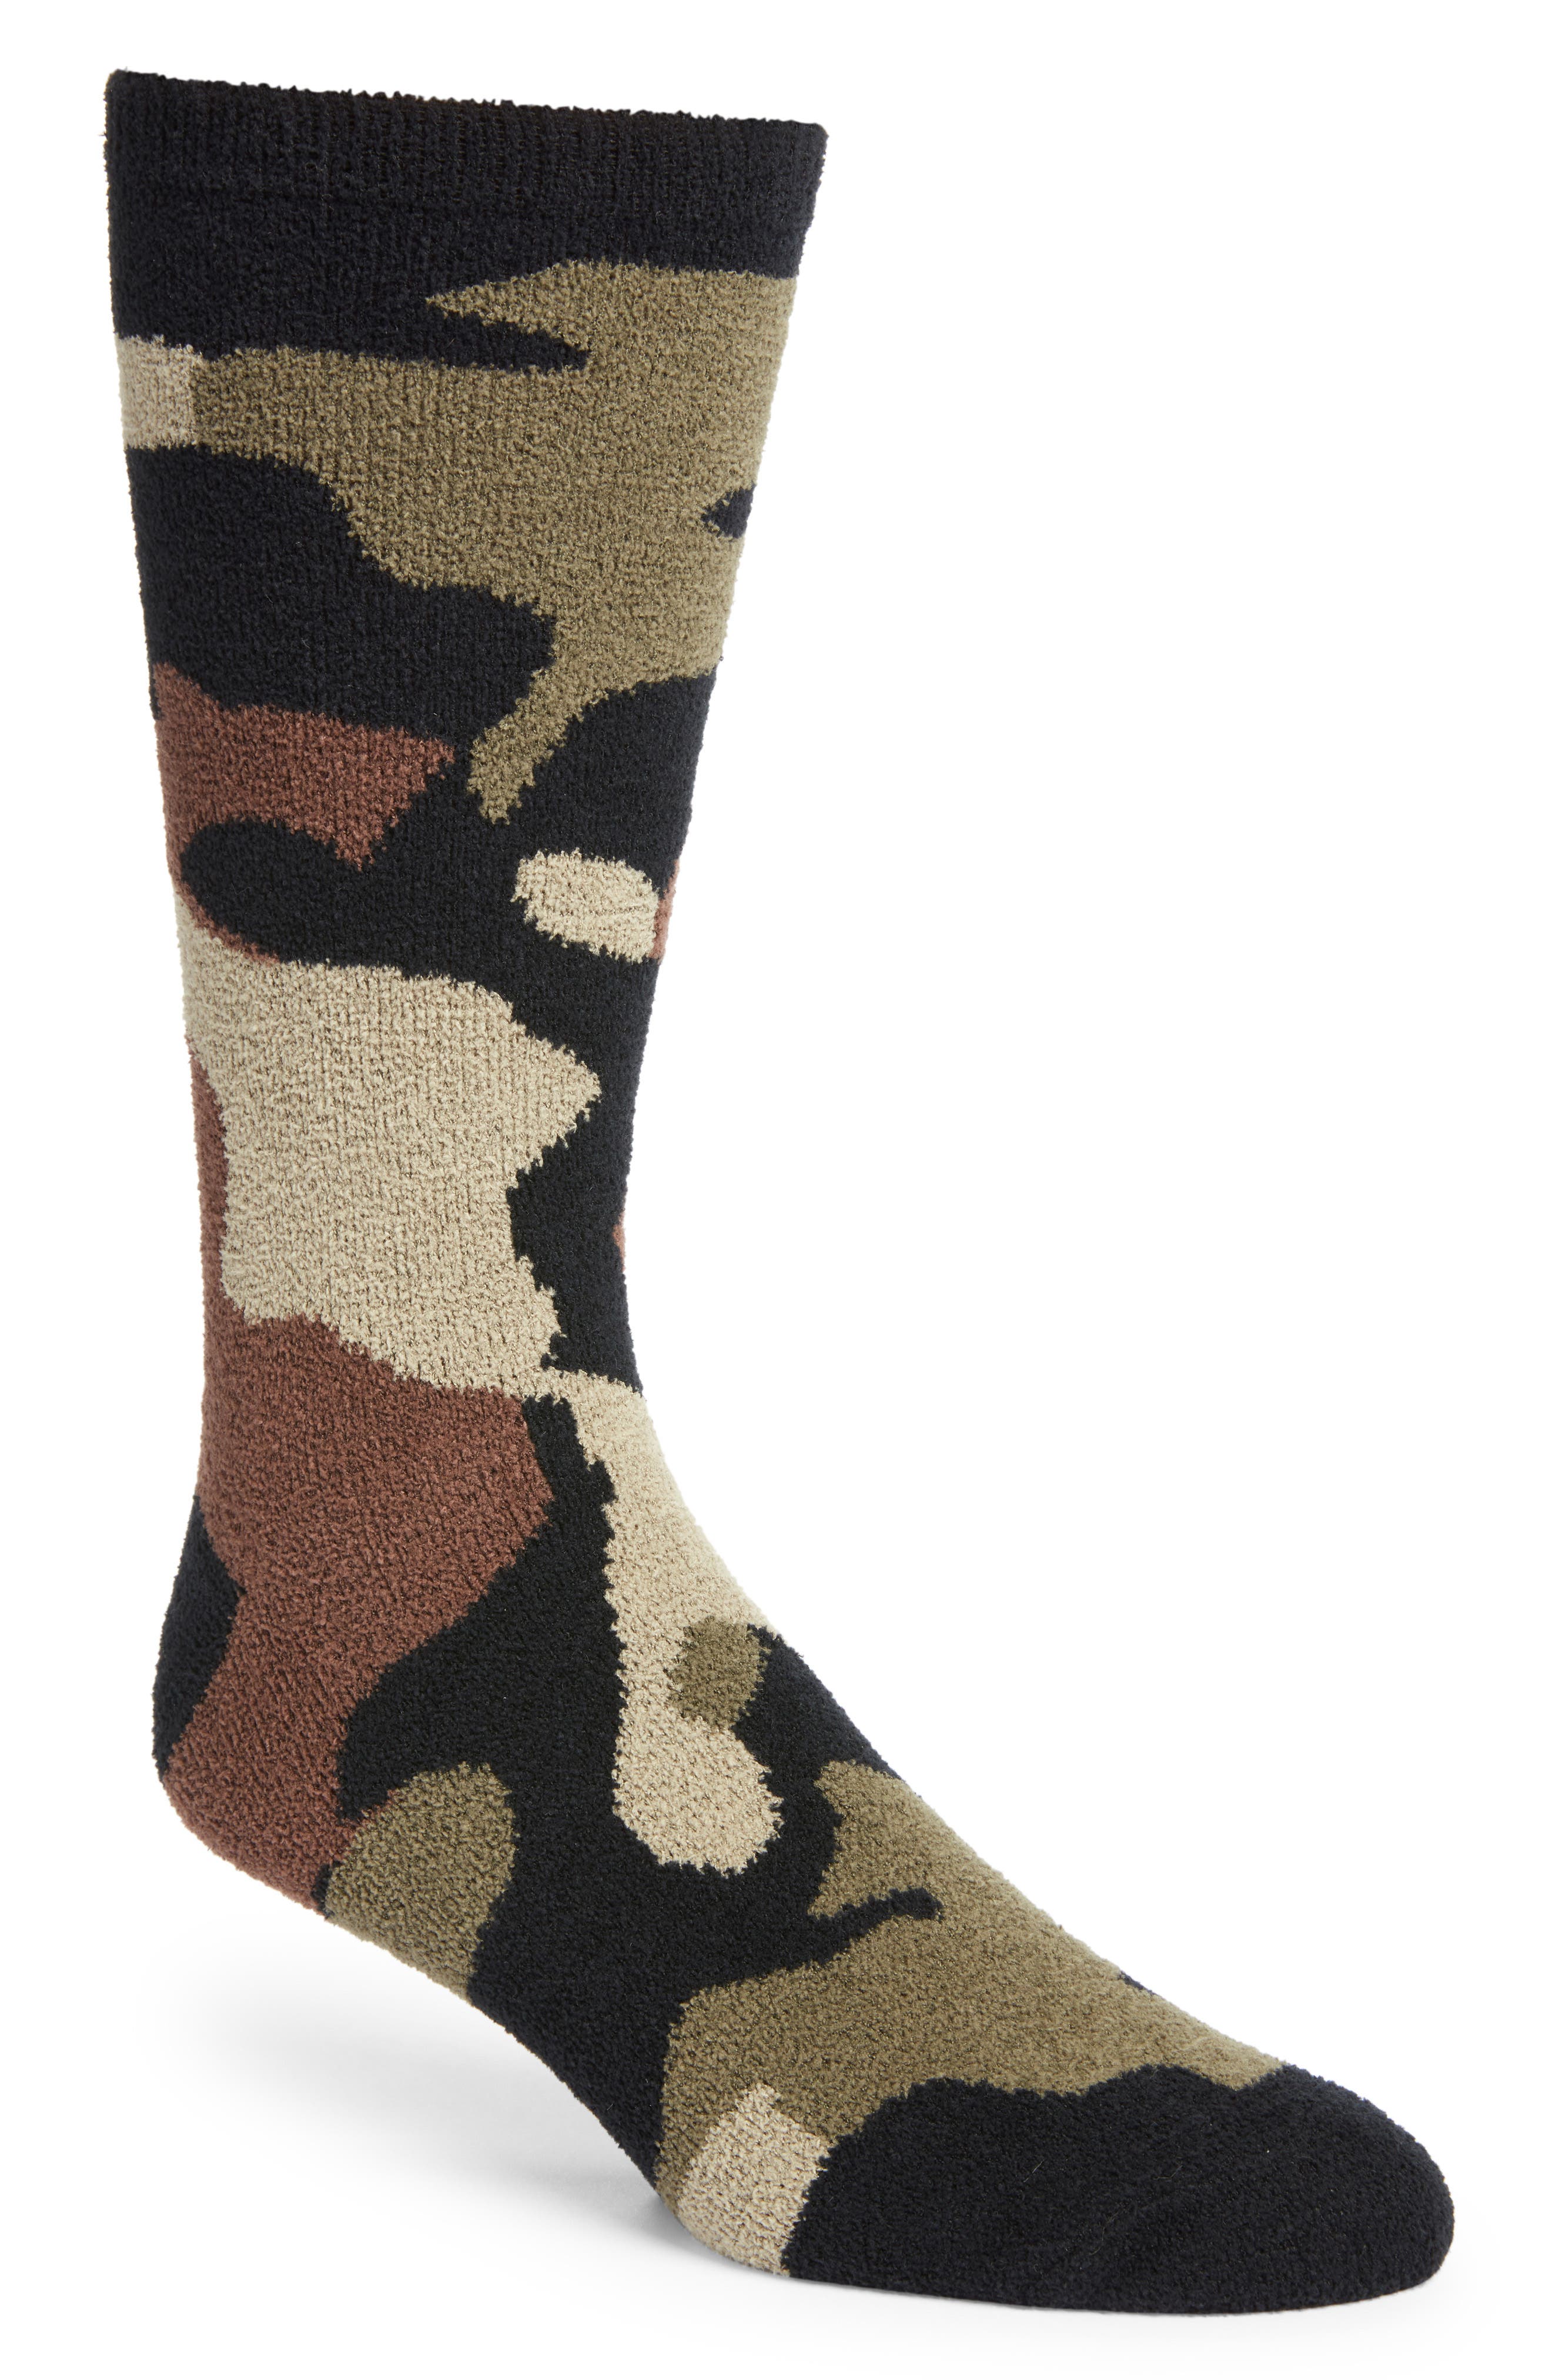 Army green Men Camo Socks Fashion Patterned Crew Socks Comfort Cotton Socks 